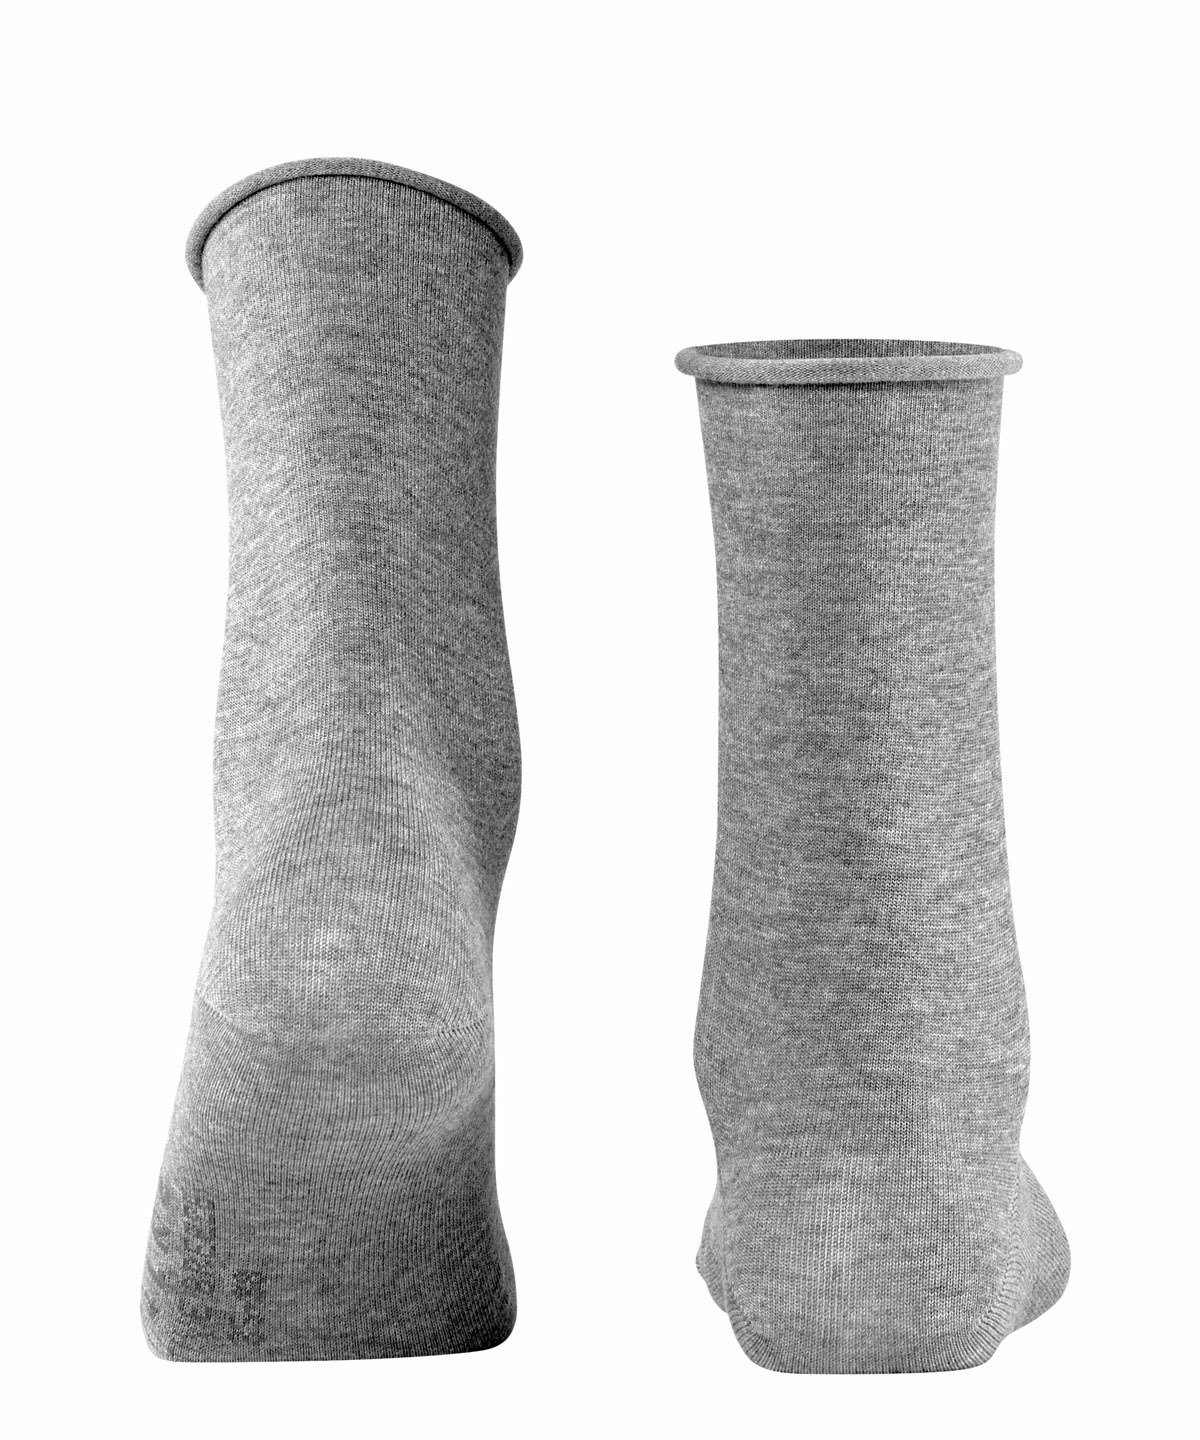 Breeze Grau Active - Damen FALKE Kurzsocken Socken Rollbündchen Uni,